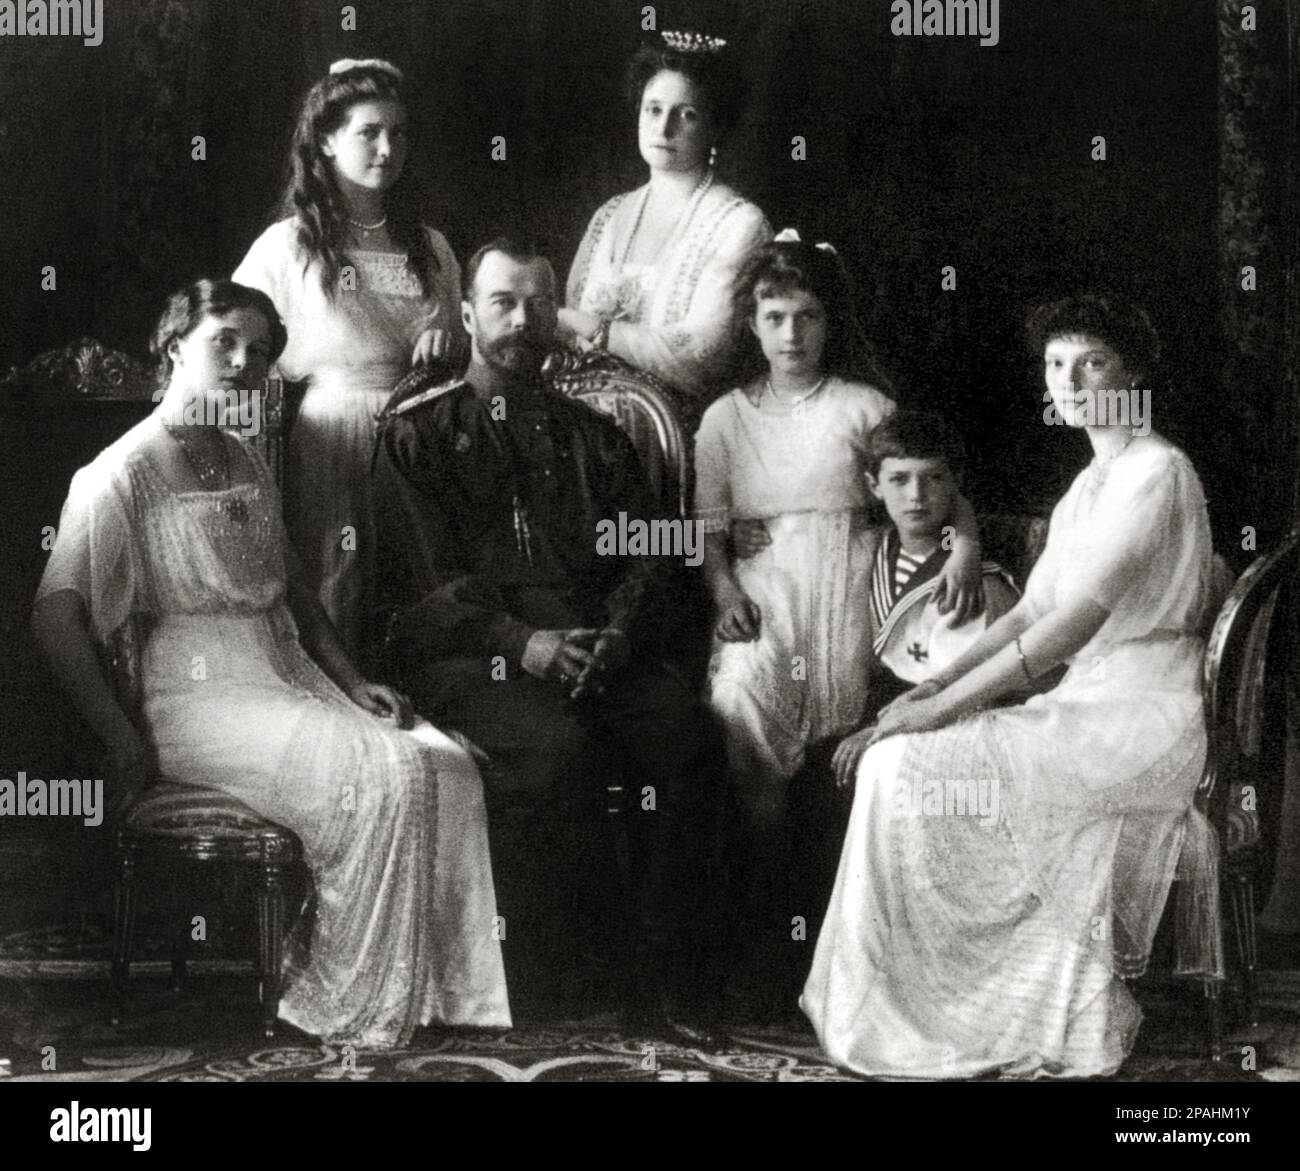 1911 :  The russian Tsar NICHOLAS II of Russia ( 1868– 1918)  with wife Empress Tsarina ALEXANDRA FYODOROVNA ( Feodorovna , Alix of Hesse and by Rhine 1872 - dead the day  17 July 1918 with all the royal family ). In this photo with sons  : crownprince Grand Duke Tsarevich ALEXEI Nikolaevich ROMANOV ( born 1904 ),  MARIE ( Maria , born 1899 ), TATIANA ( born 1897 ), ANASTASIA ( born 1901 ) and OLGA (born  1895 )- HISTORY  foto storiche - foto storica   - portrait - ritratto - nobilta'  - nobility - nobili  - nobile - BELLE EPOQUE  - RUSSIA - ZAR - Czar - Tsarine -   TZARINA - ZARINA  - RUSSIA Stock Photo